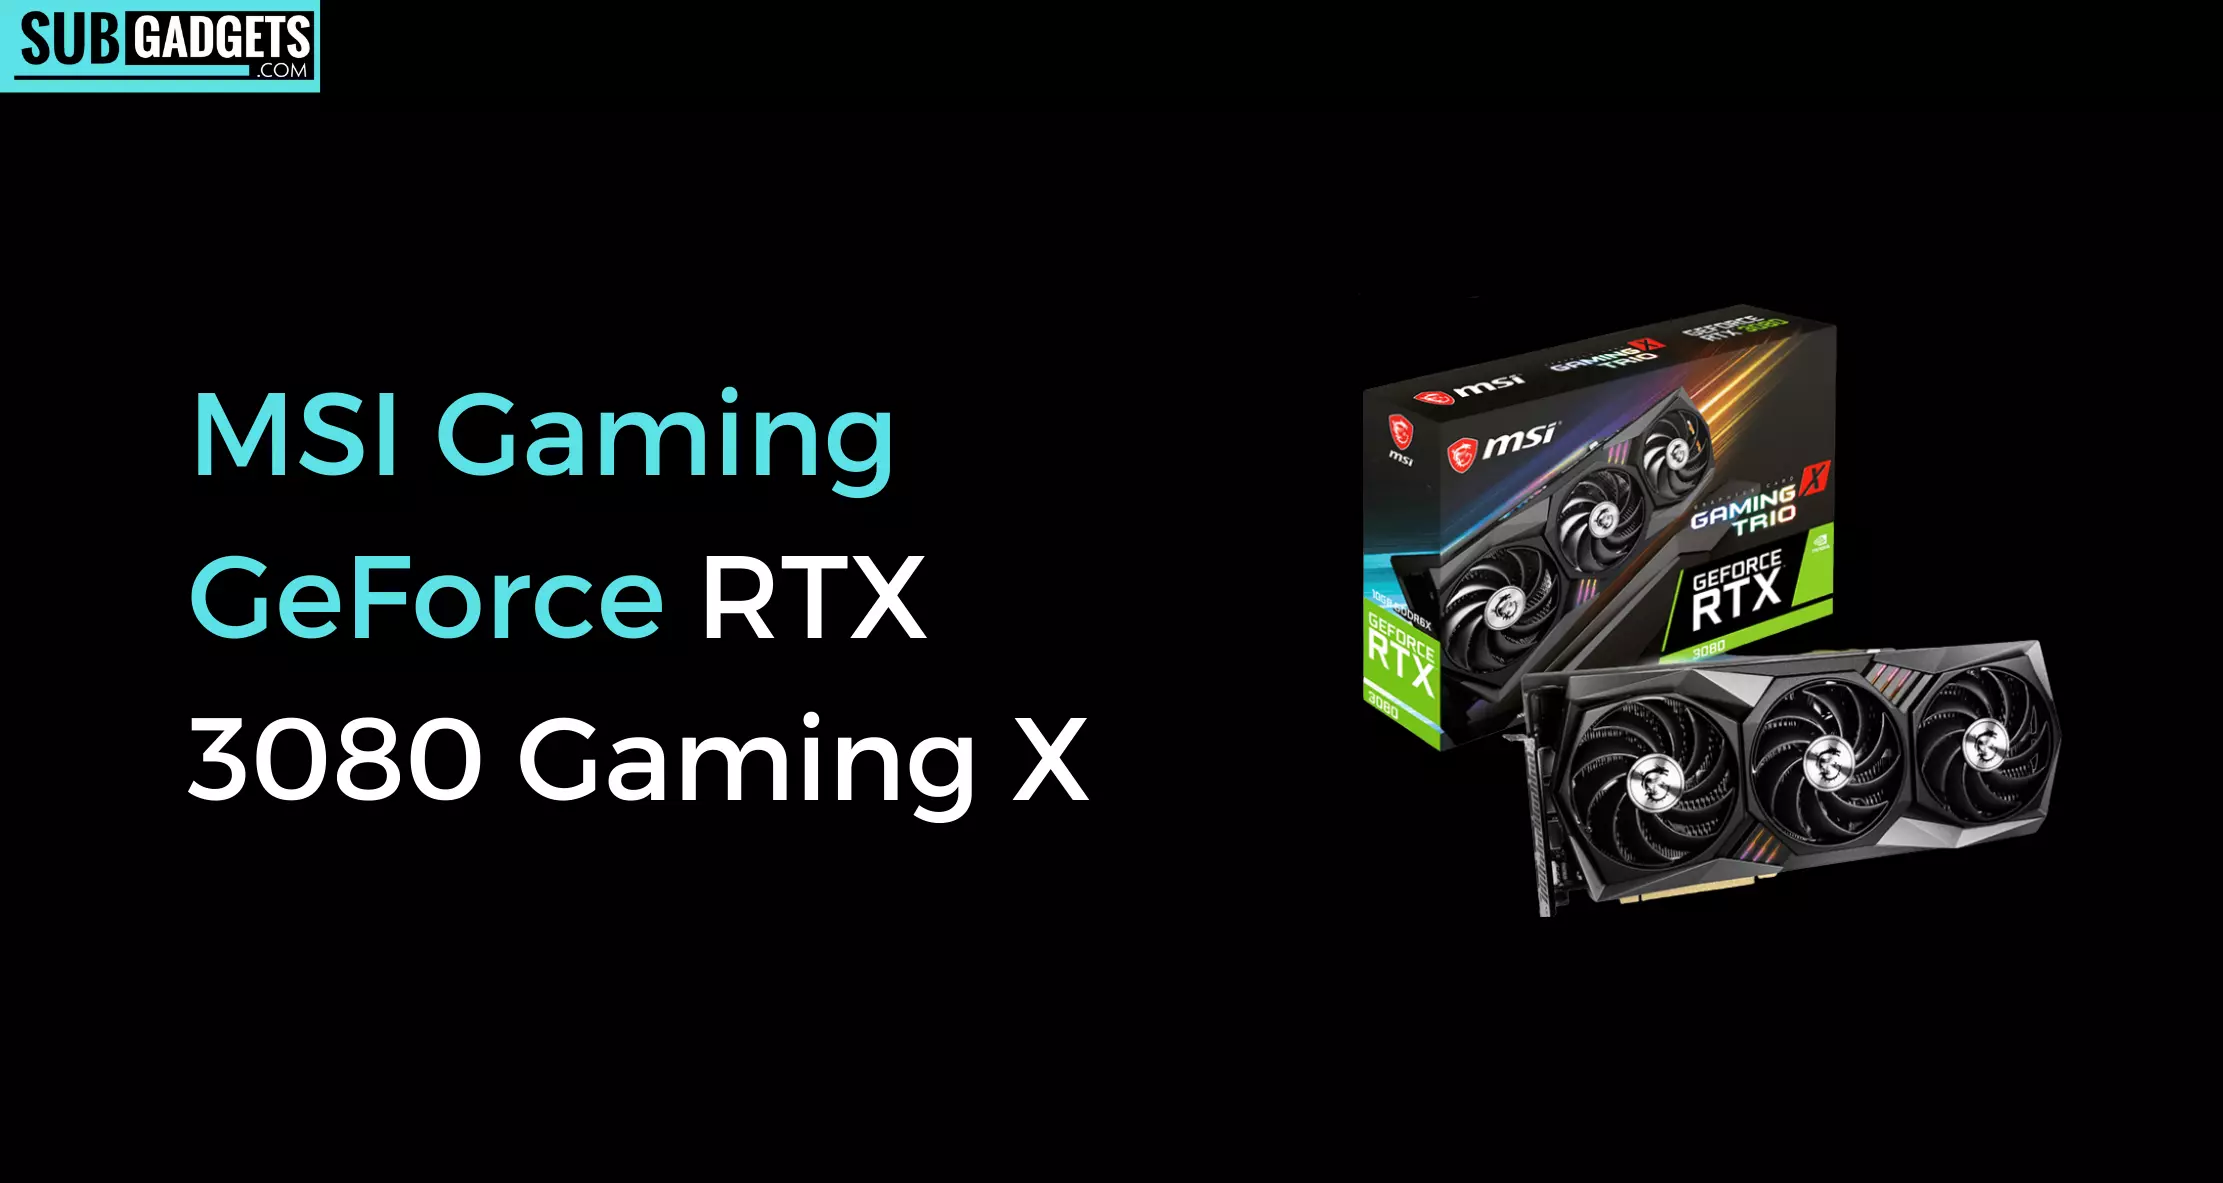 MSI Gaming GeForce RTX 3080 Gaming X review